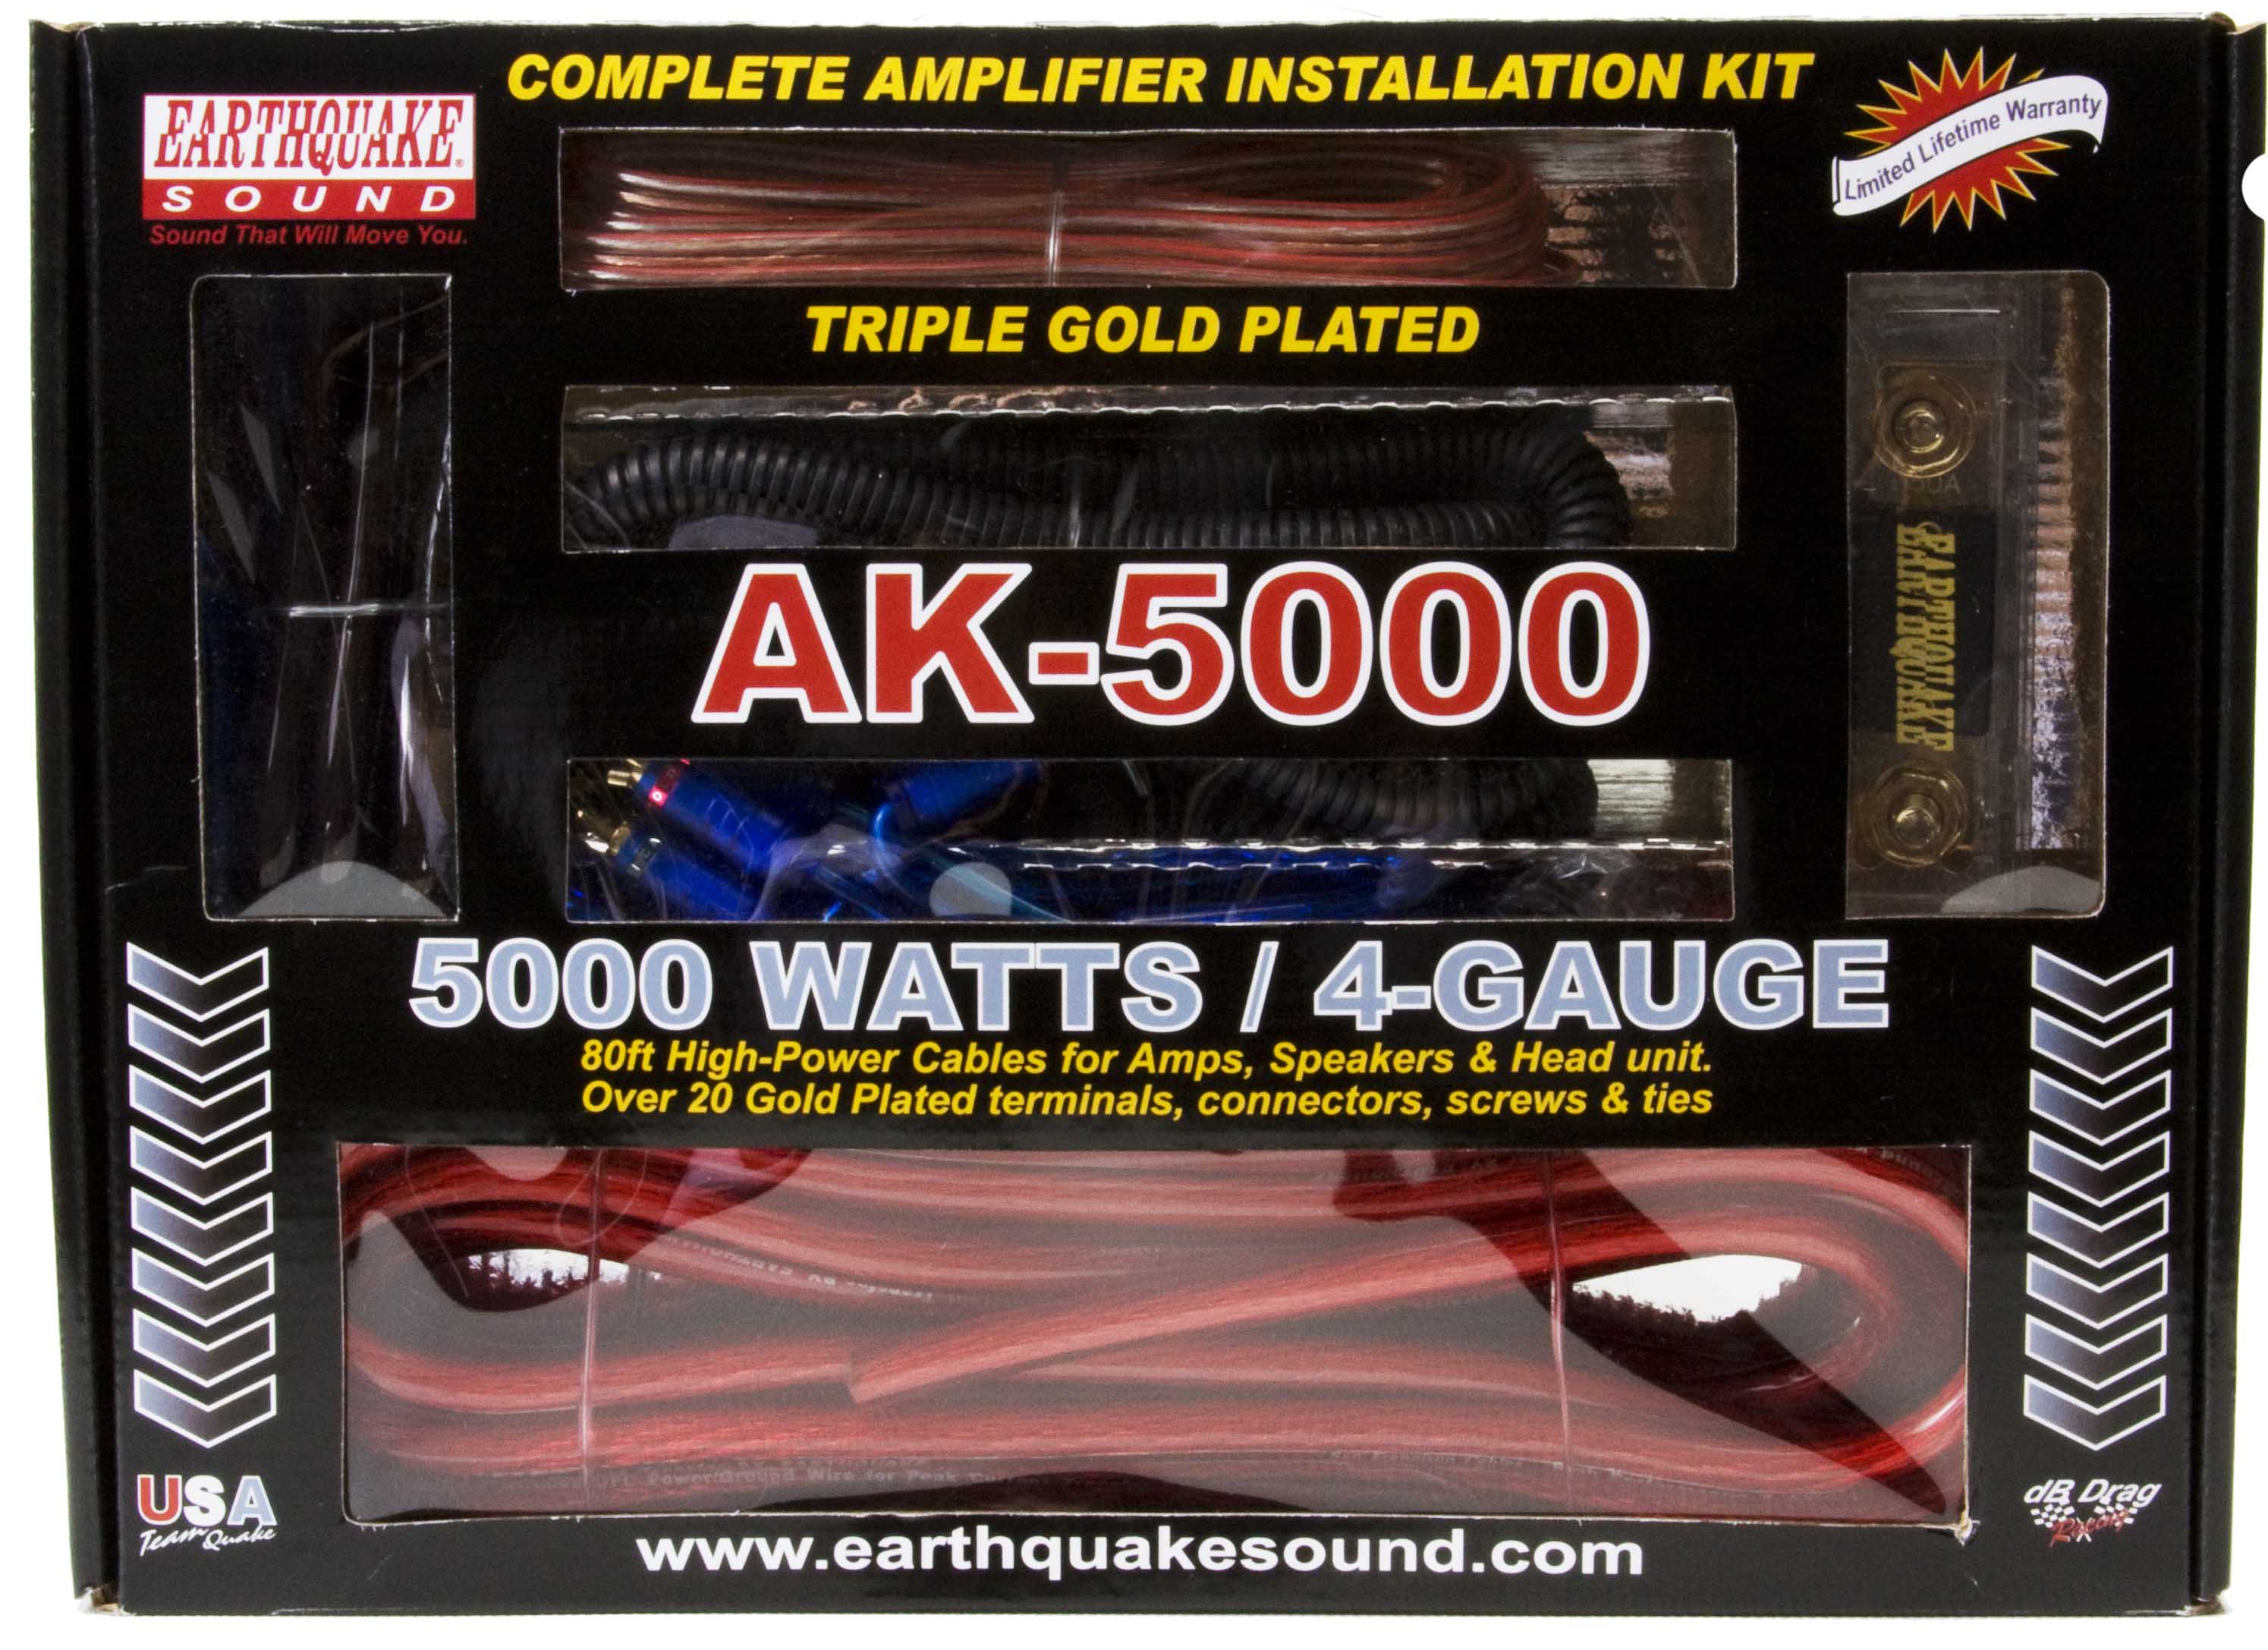 AK-5000 Installation Kit